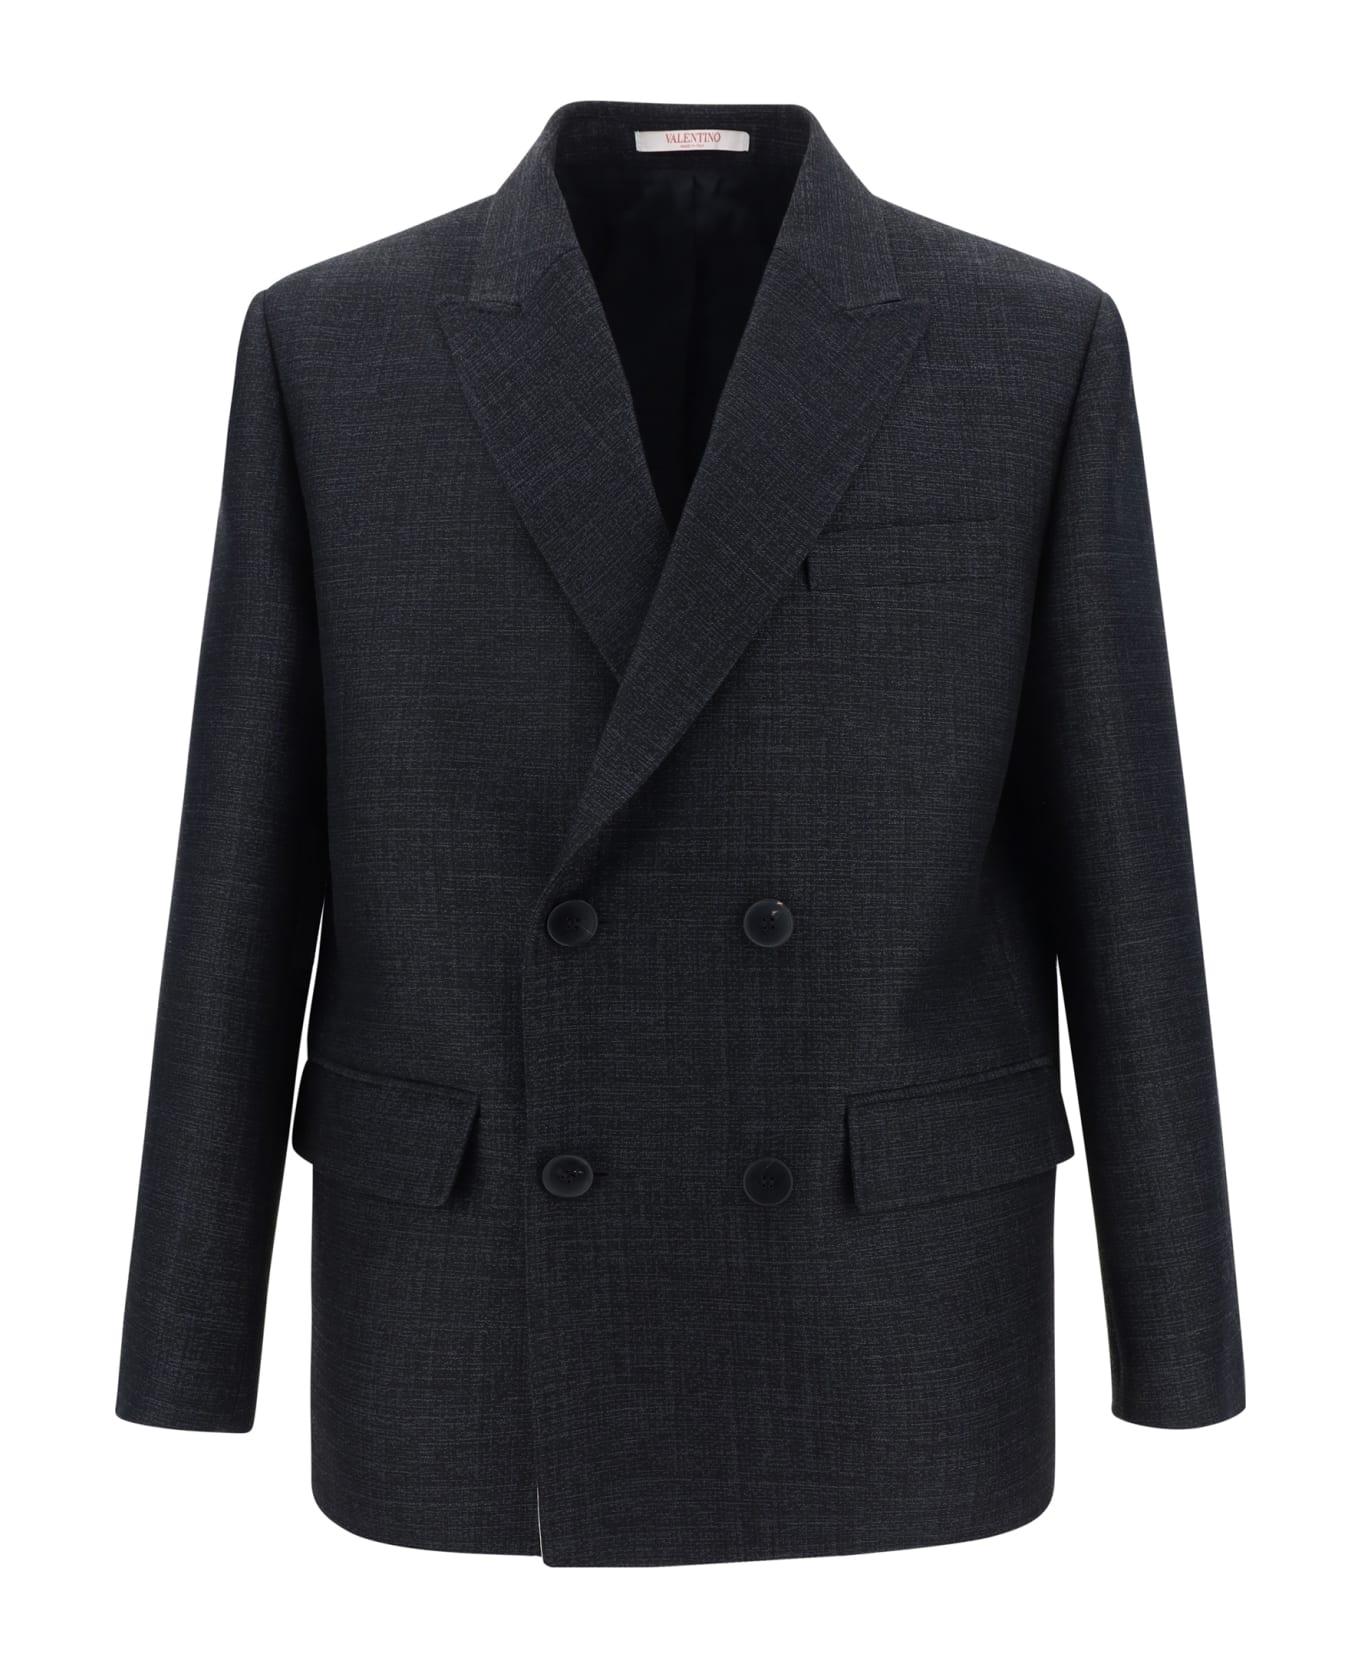 Valentino Formal Blazer Jacket - Grigio Scuro Melange ブレザー